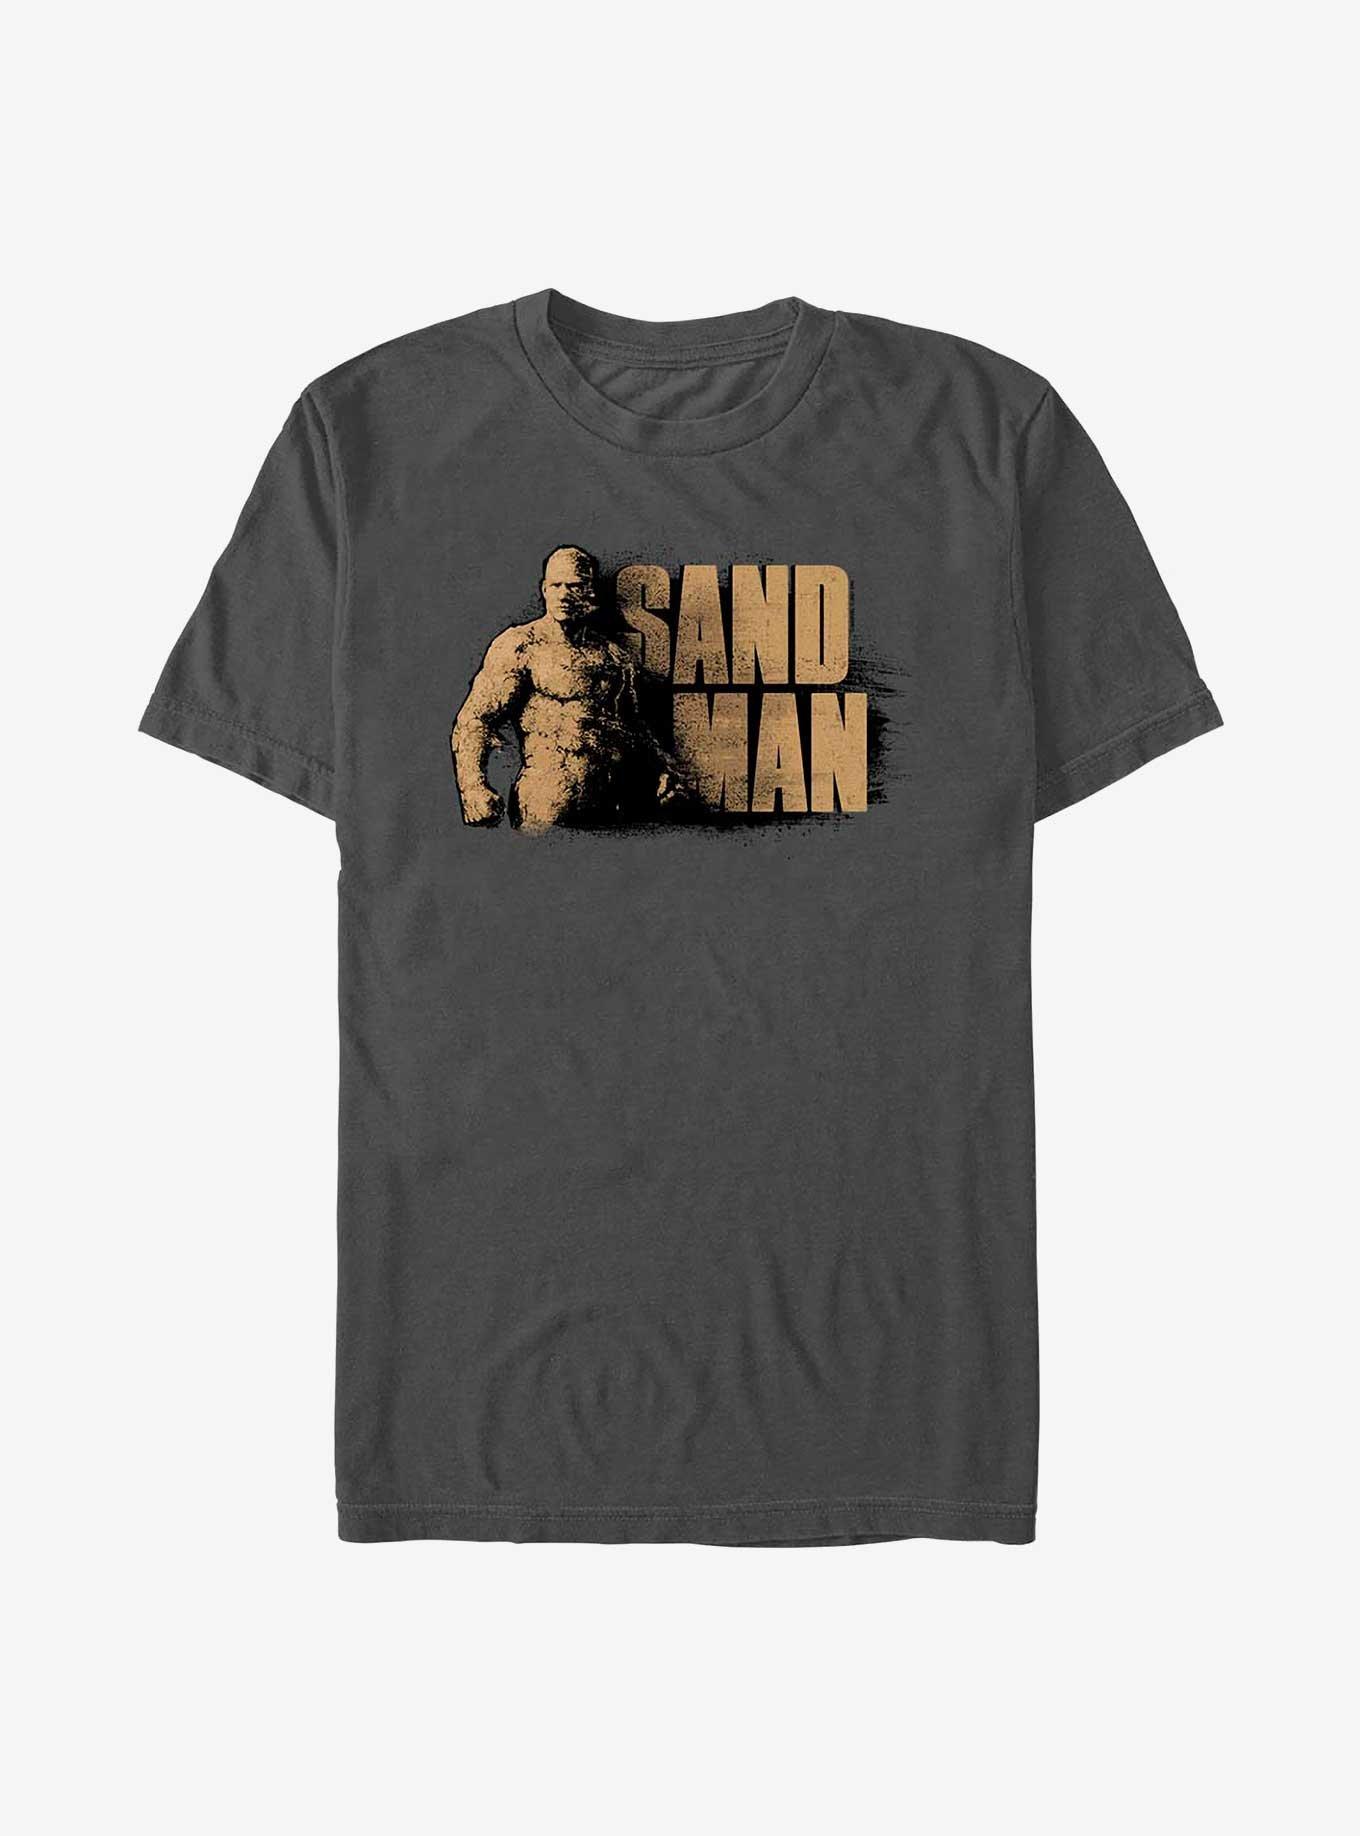 Marvel Spider-Man: No Way Home Sandy Sand Man T-Shirt, CHARCOAL, hi-res